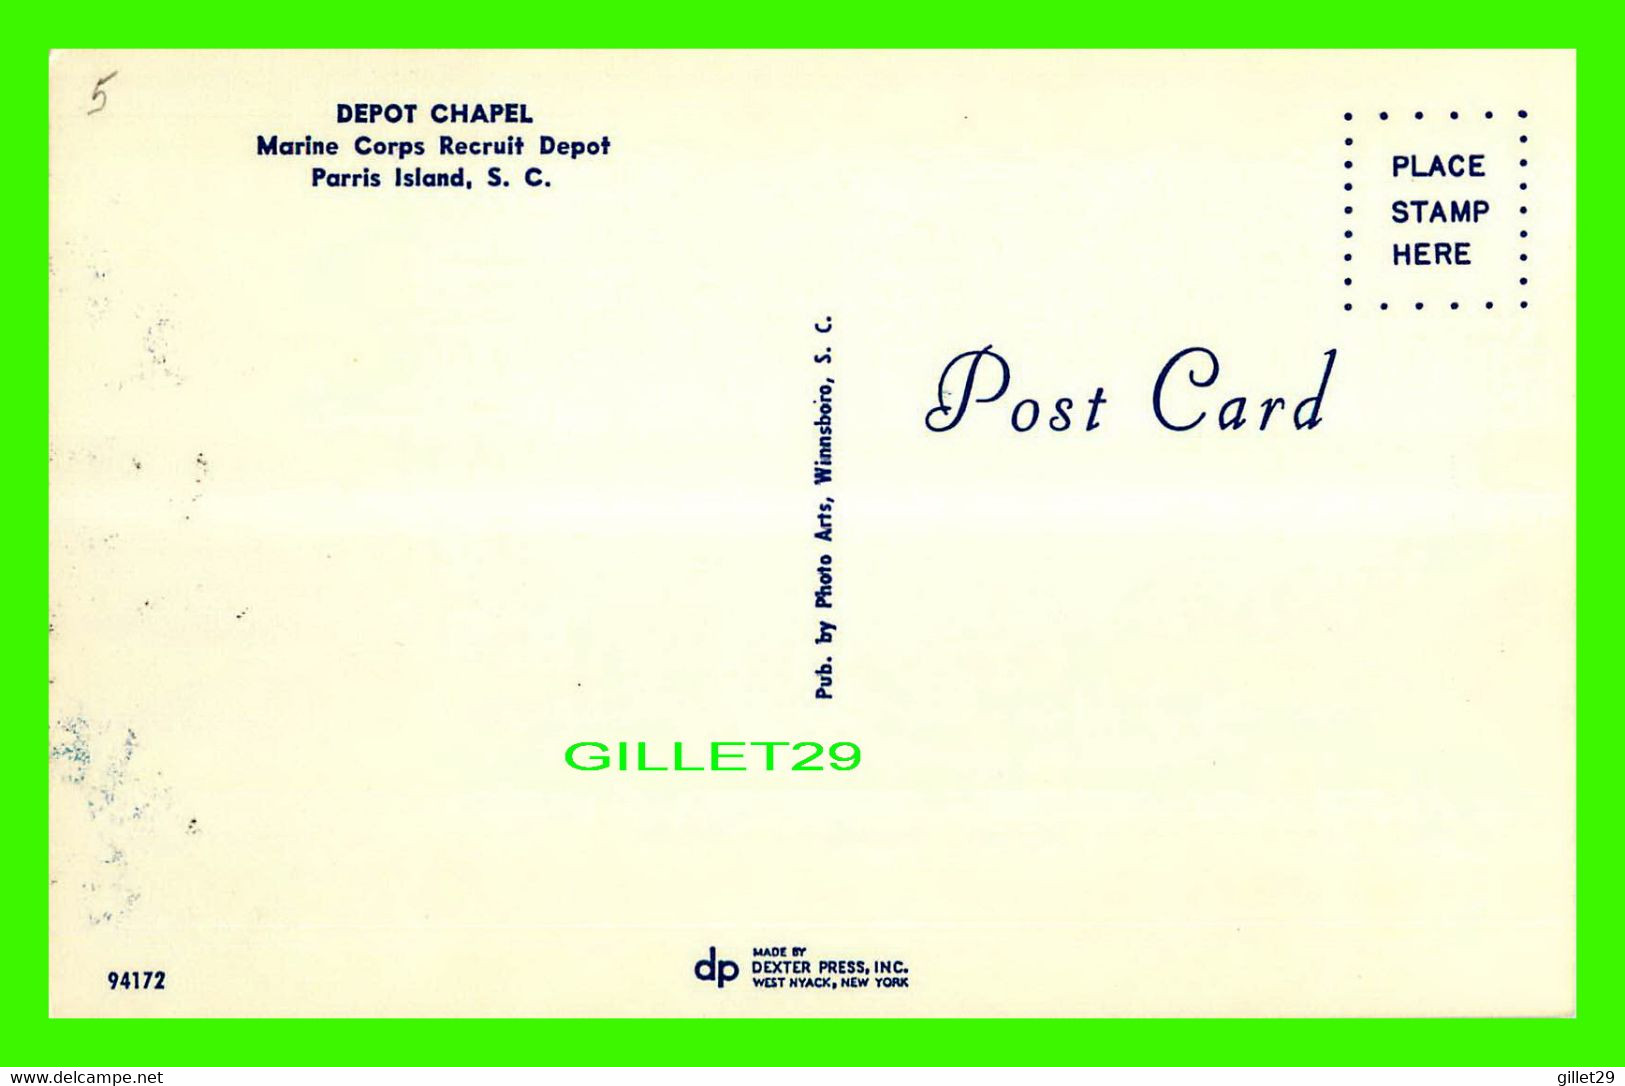 PARRIS ISLAND, SC - DEPOT CHAPEL, MARINE CORPS RECRUIT DEPOT - PUB. BY  PHOTO ARTS - DEXTER PRESS INC - - Parris Island